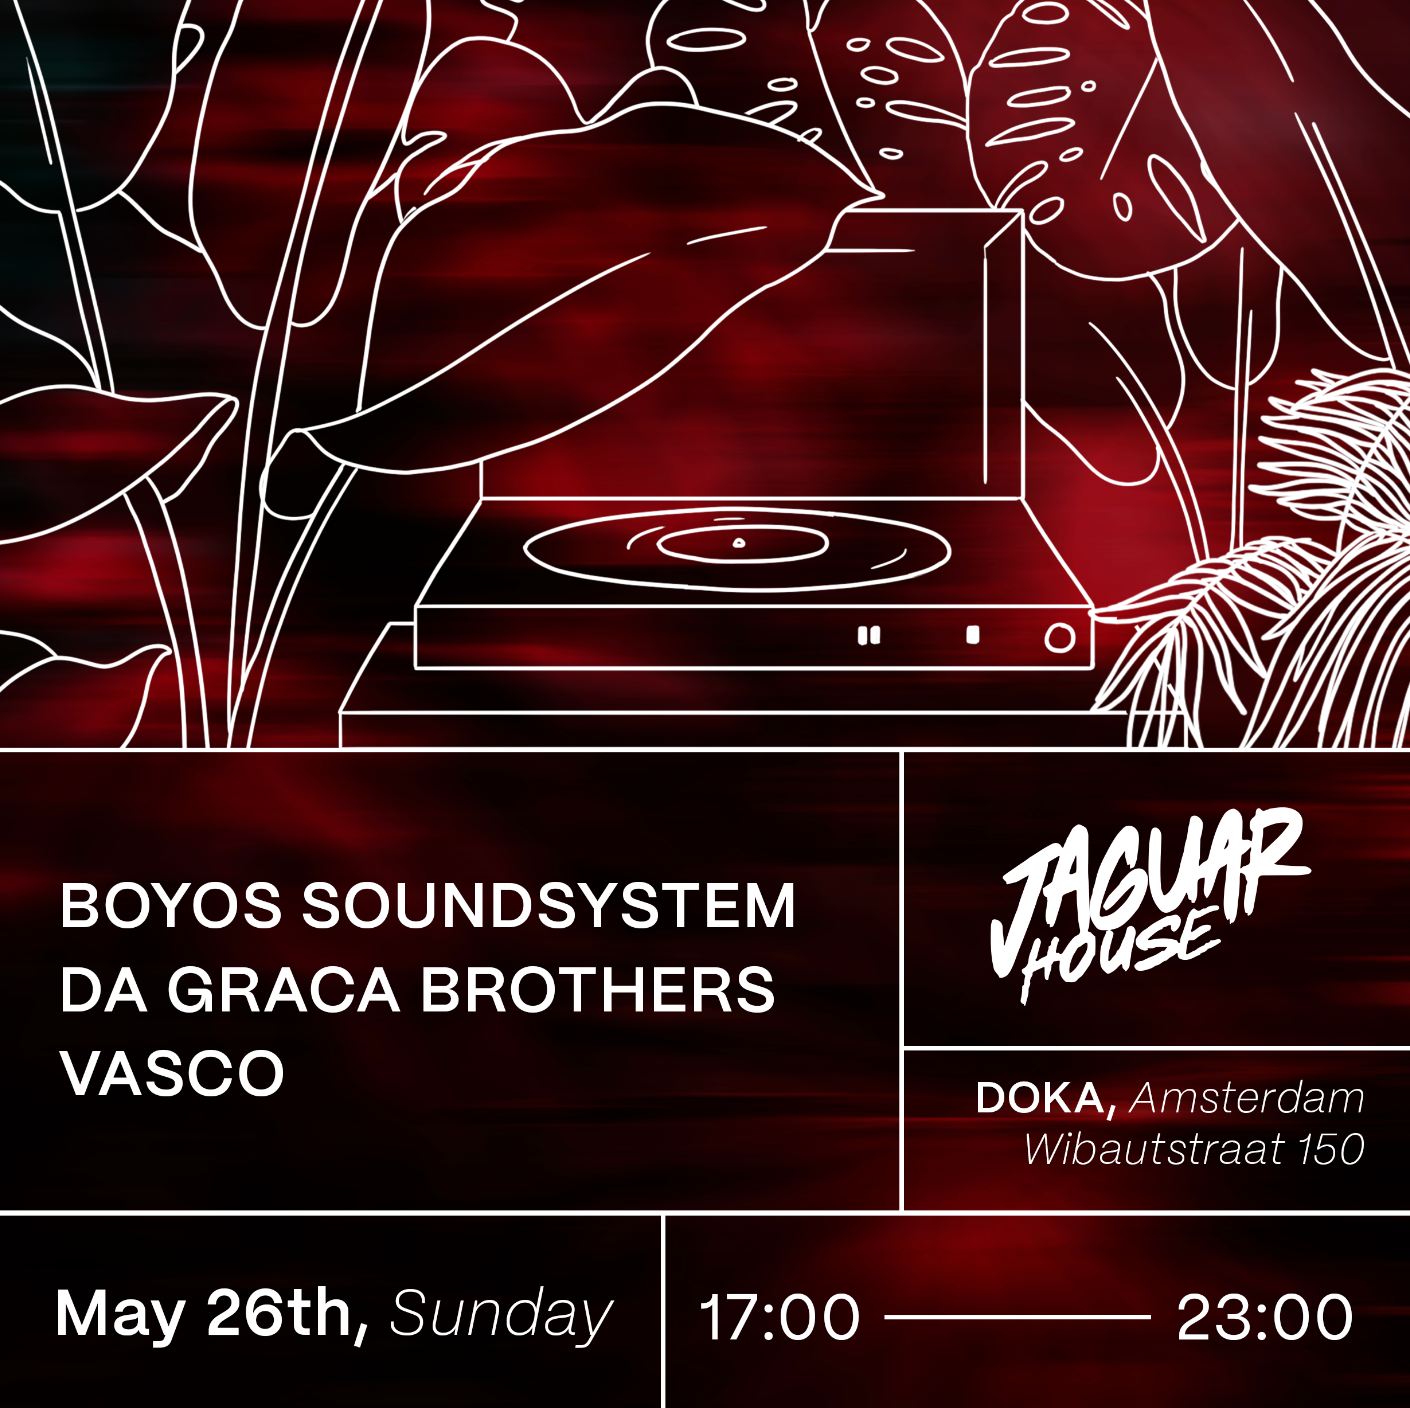 Jaguar House x Doka Studio with Boyos Soundsystem - da Graca Brothers - Vasco - フライヤー表